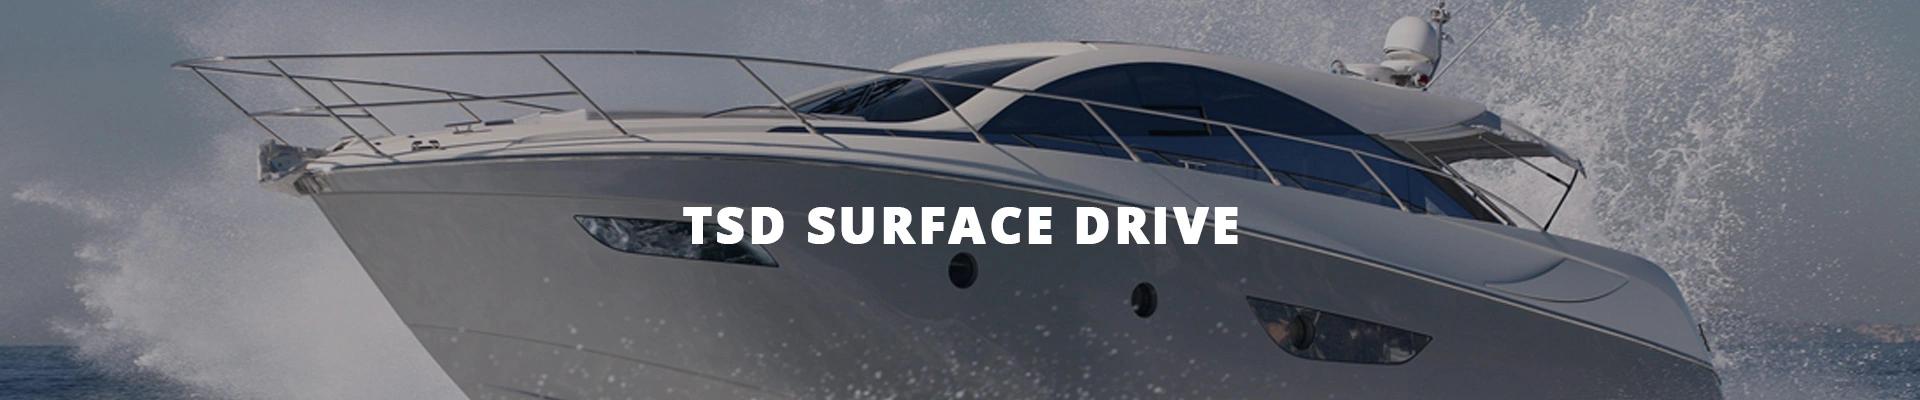 TSD high quality surface drive